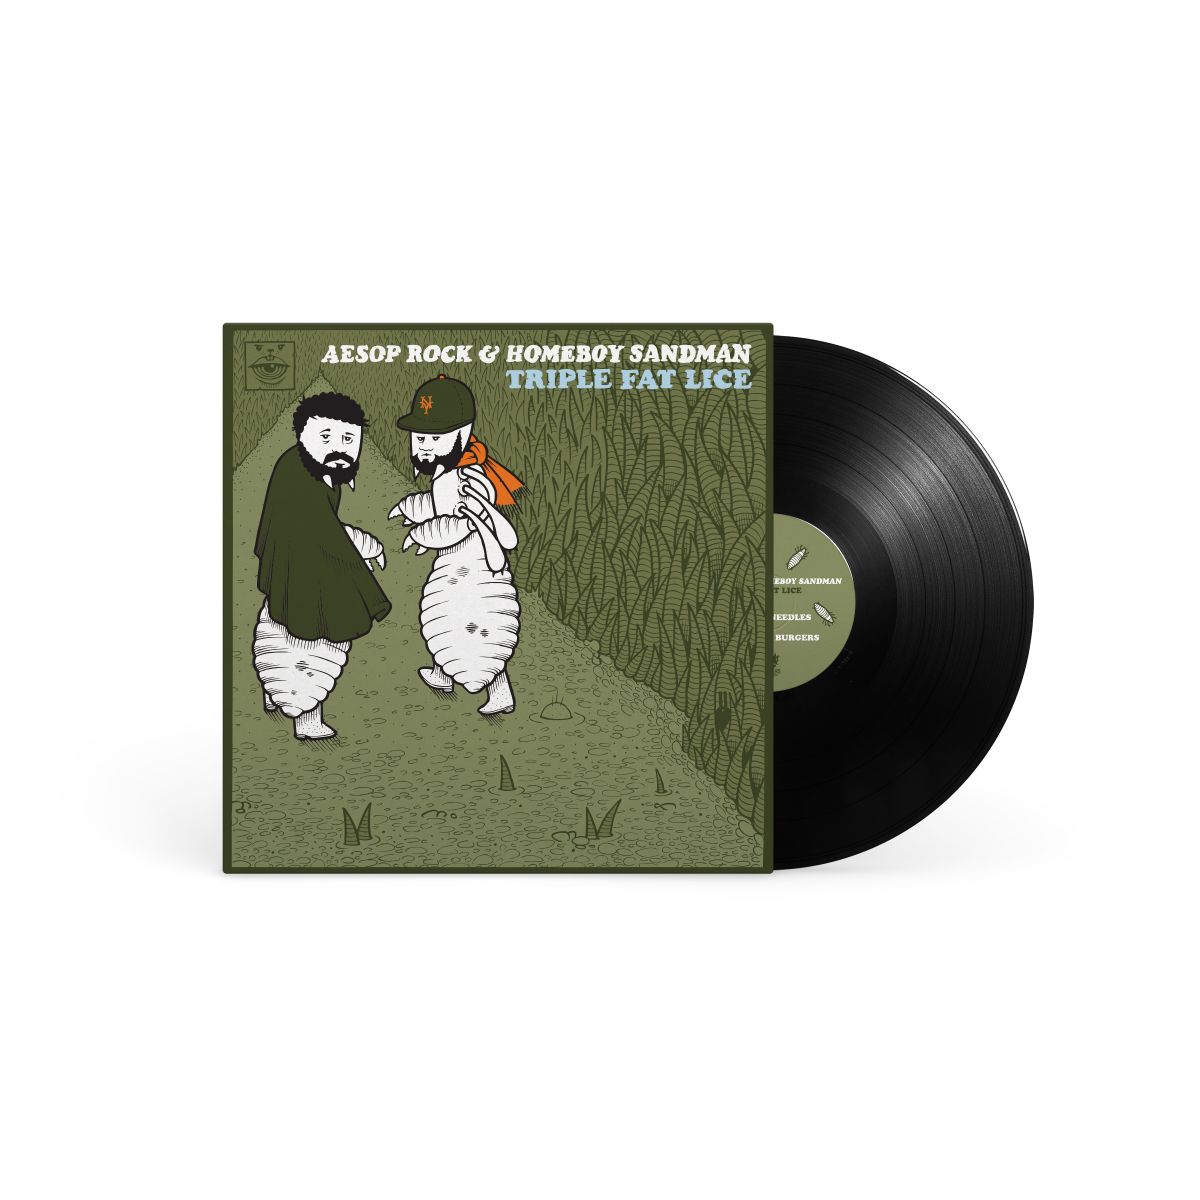 AESOP ROCK & HOMEBOY SANDMAN - Triple Fat Lice (2022 Reissue) - LP - Vinyl